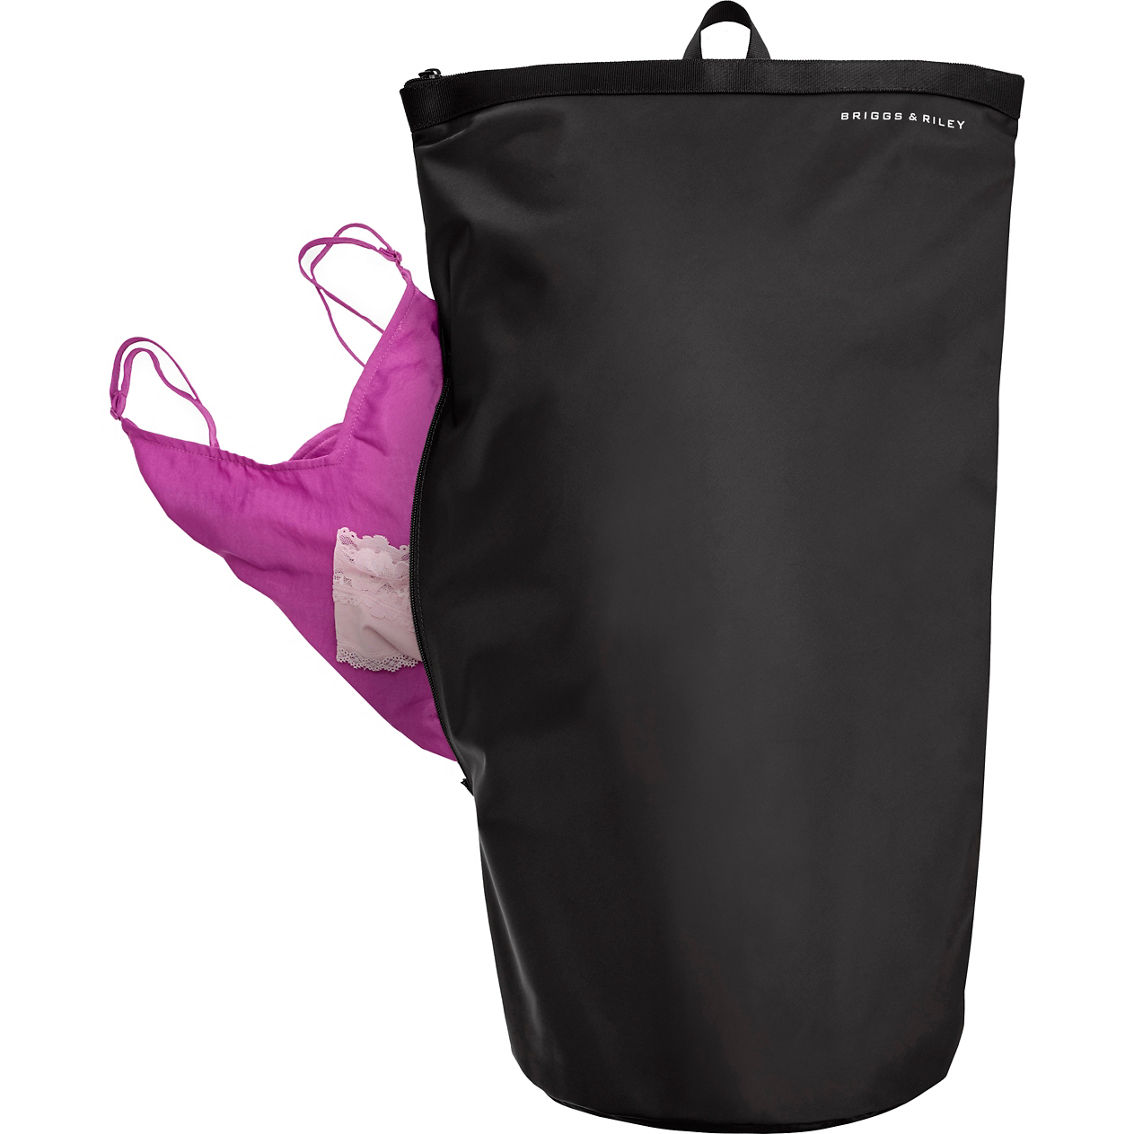 Briggs & Riley Travel Essentials Zippered Laundry Bag Black - Image 2 of 3